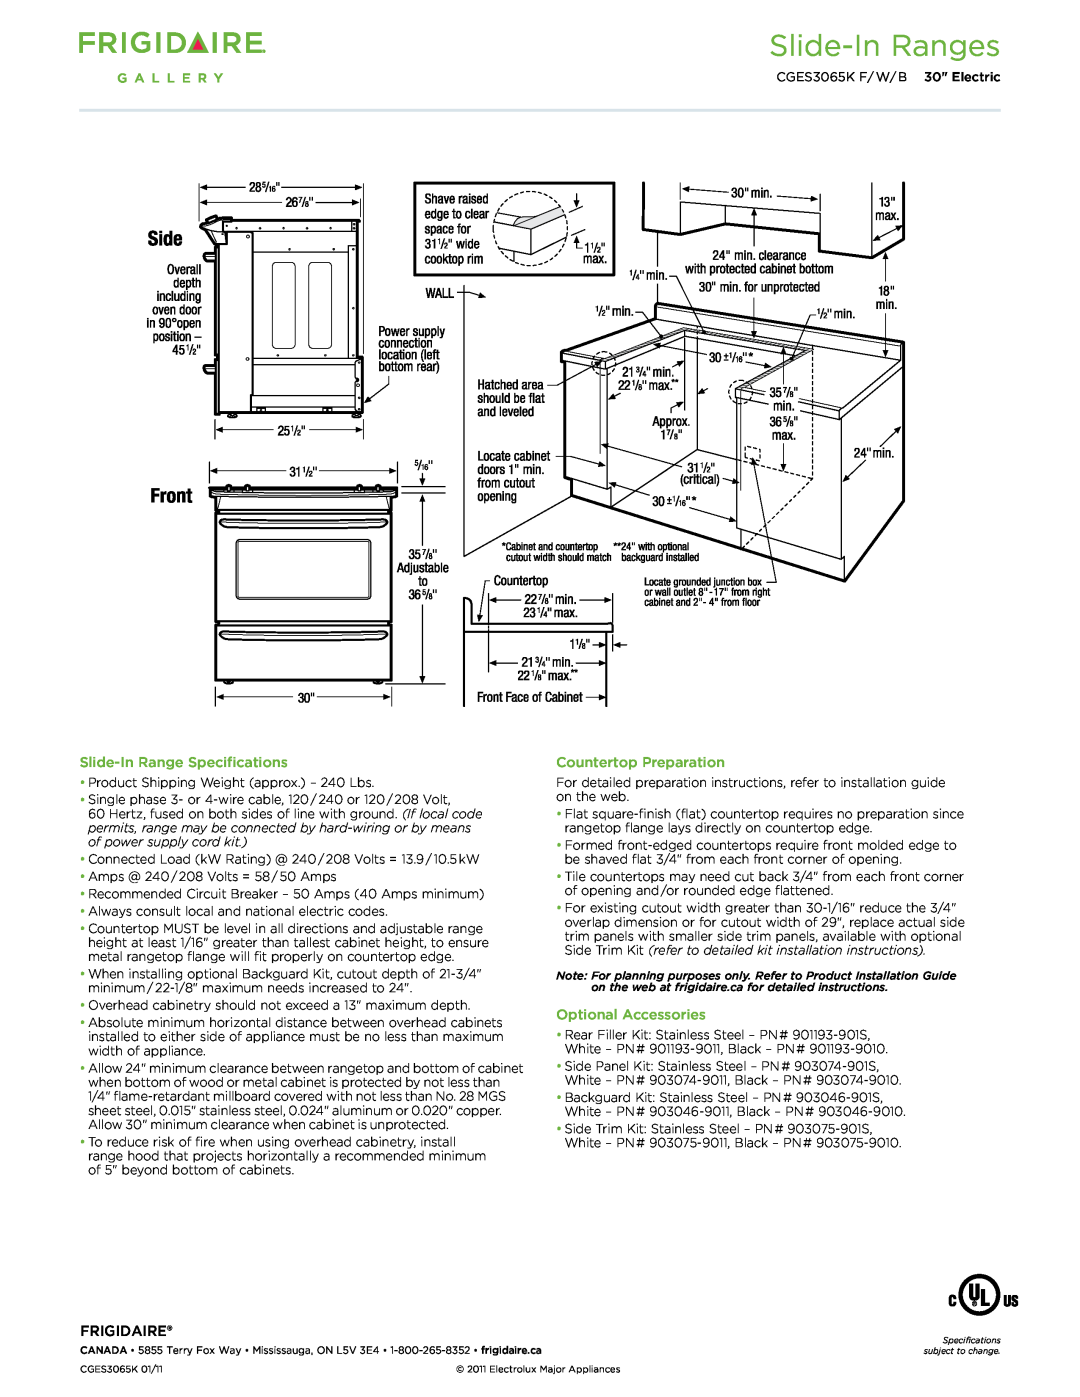 Frigidaire CGES3065K F/W/B Slide-InRange Specifications, Countertop Preparation, Optional Accessories, Frigidaire 